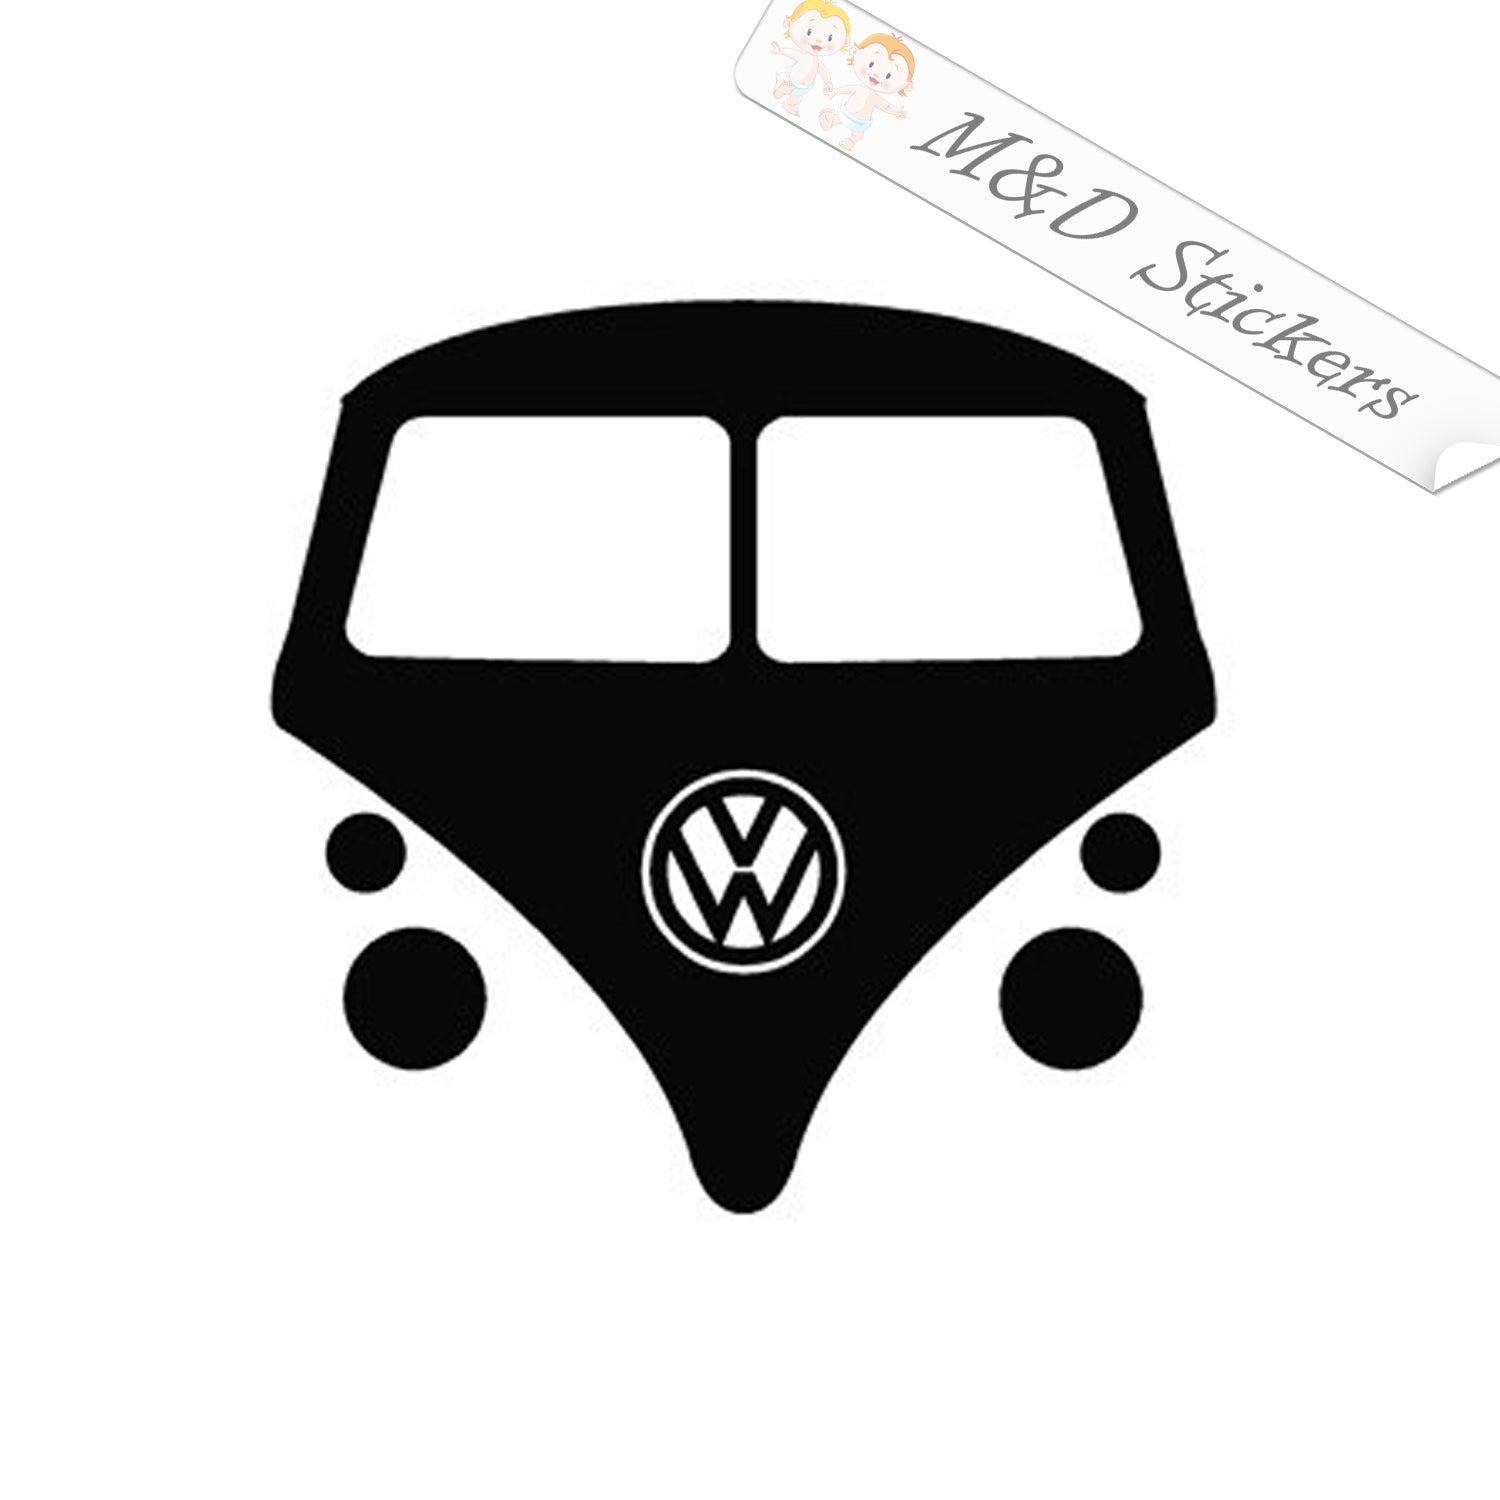 Intermediate Vedhæftet fil mus eller rotte 2x Volkswagen van Vinyl Decal Sticker Different colors & size for Cars –  M&D Stickers